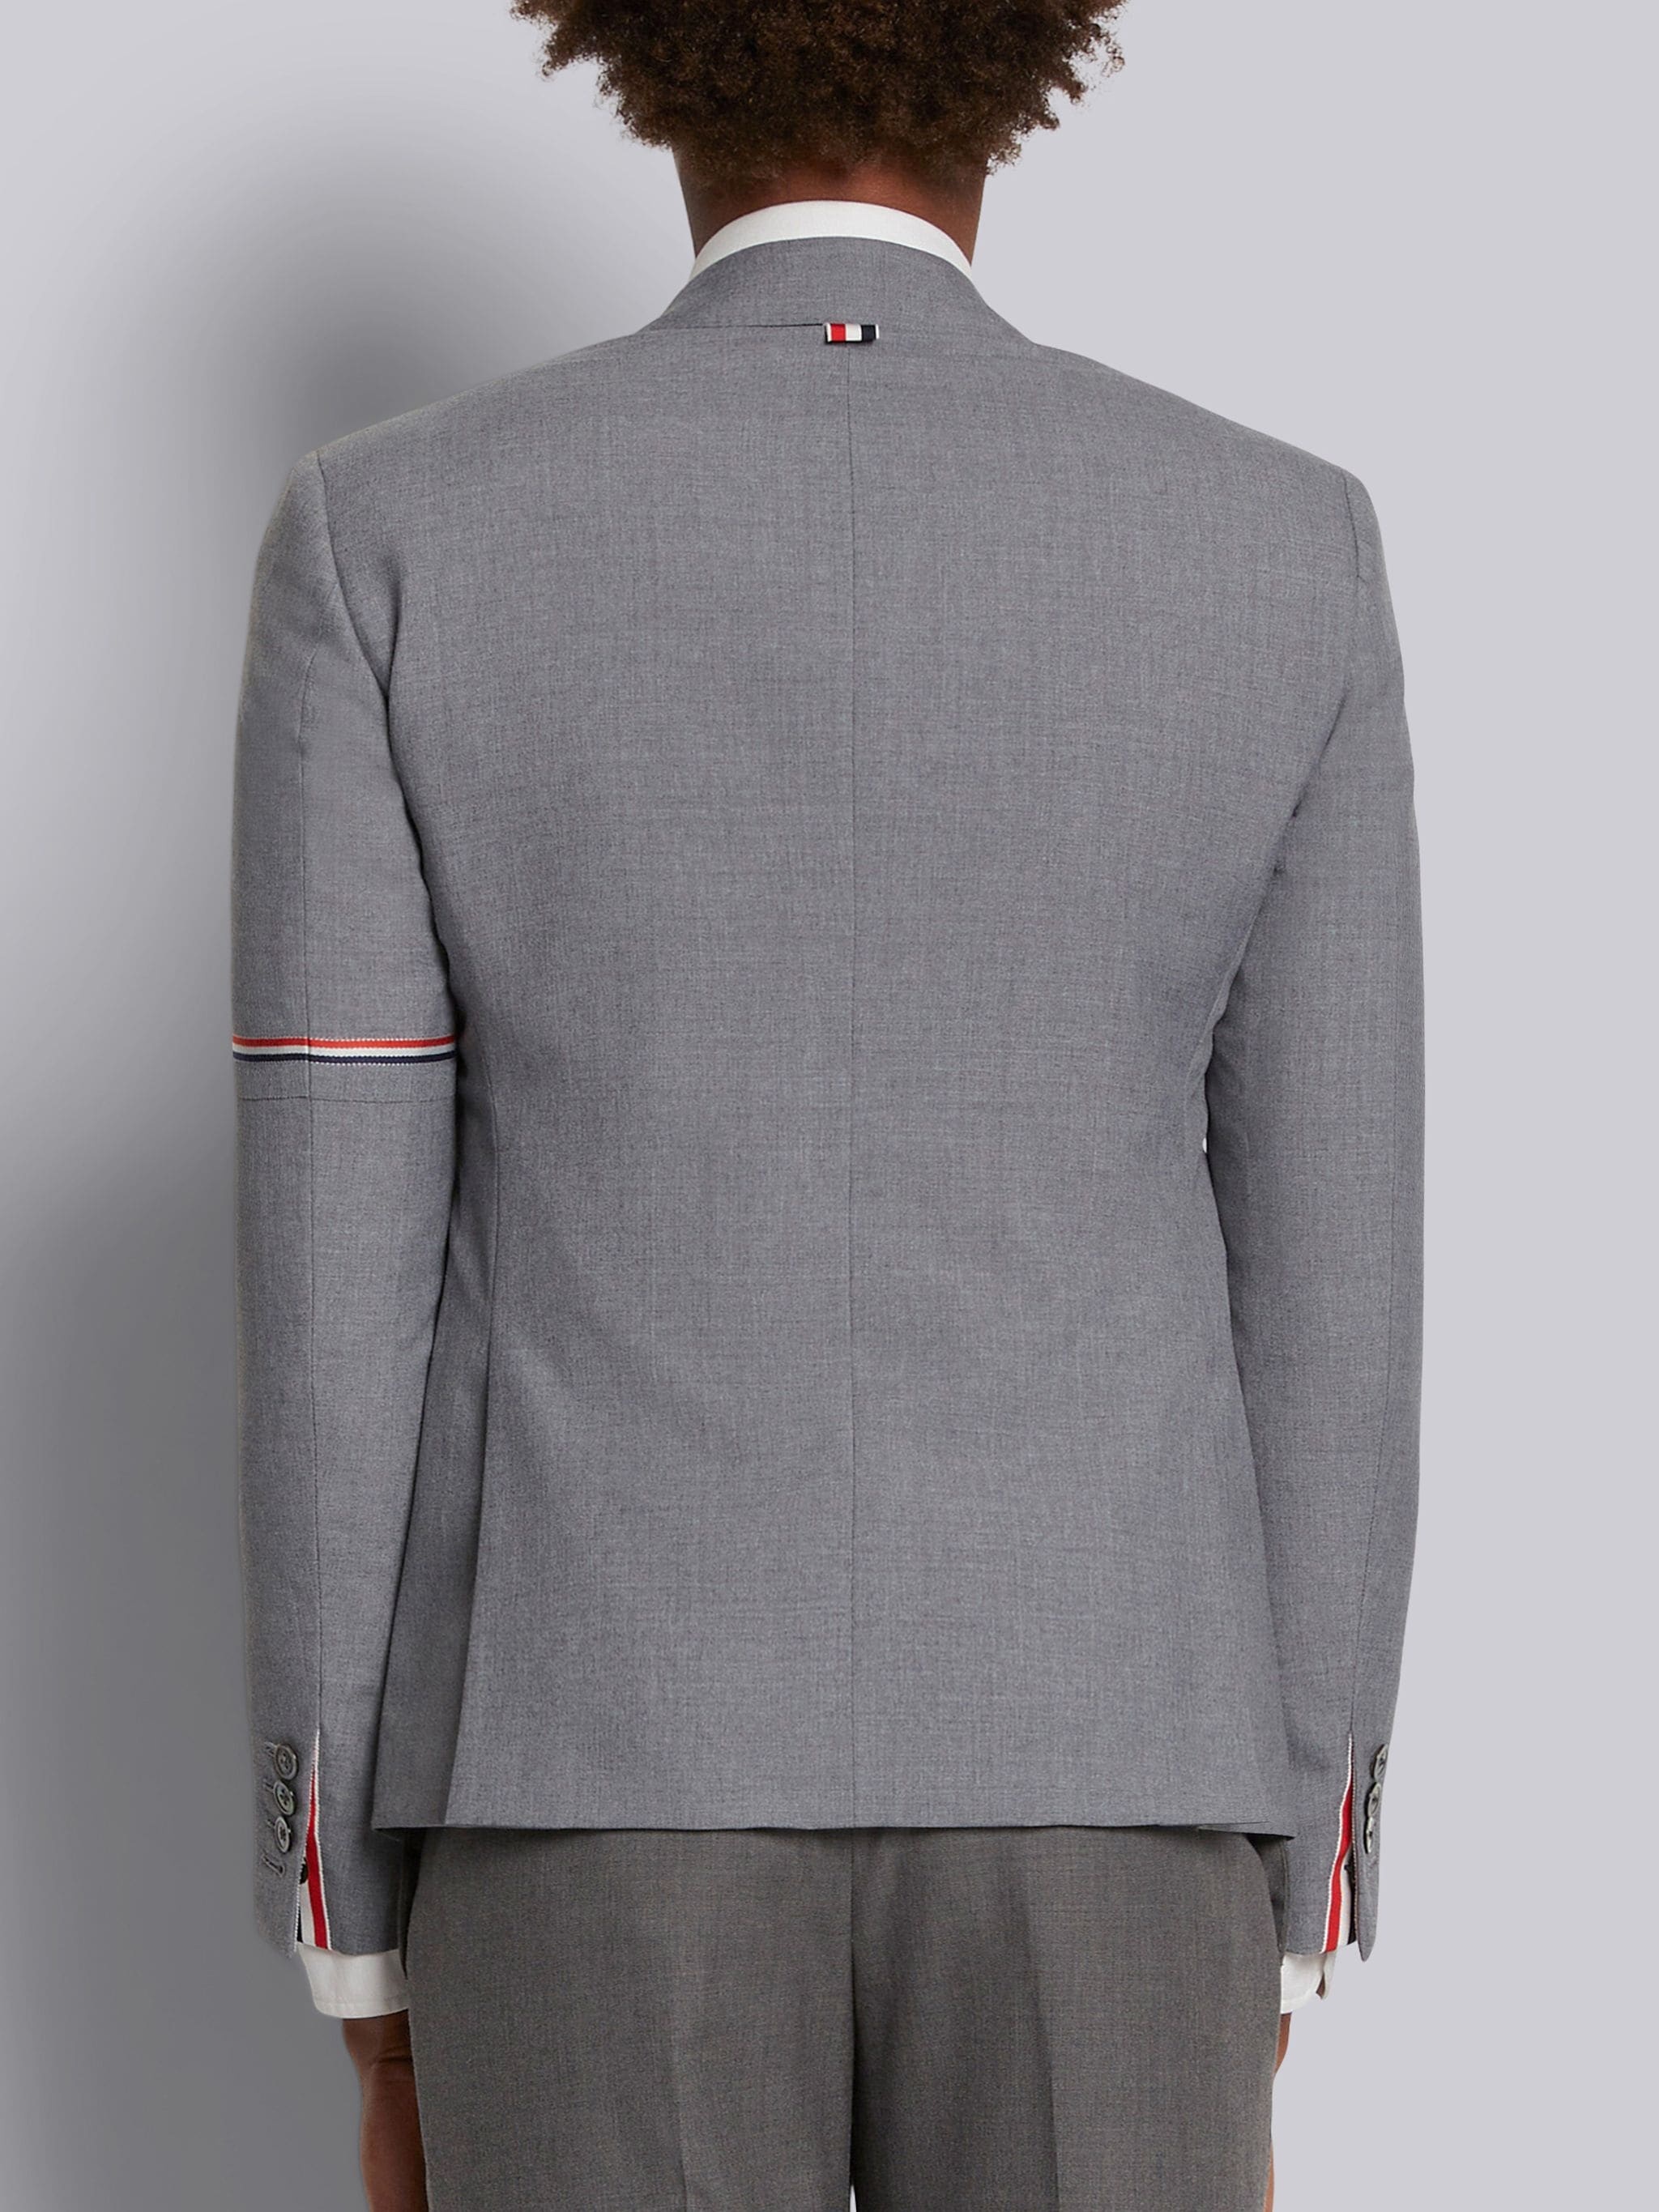 Medium Grey School Uniform Plain Weave Selvedge Armband Jacket - 3